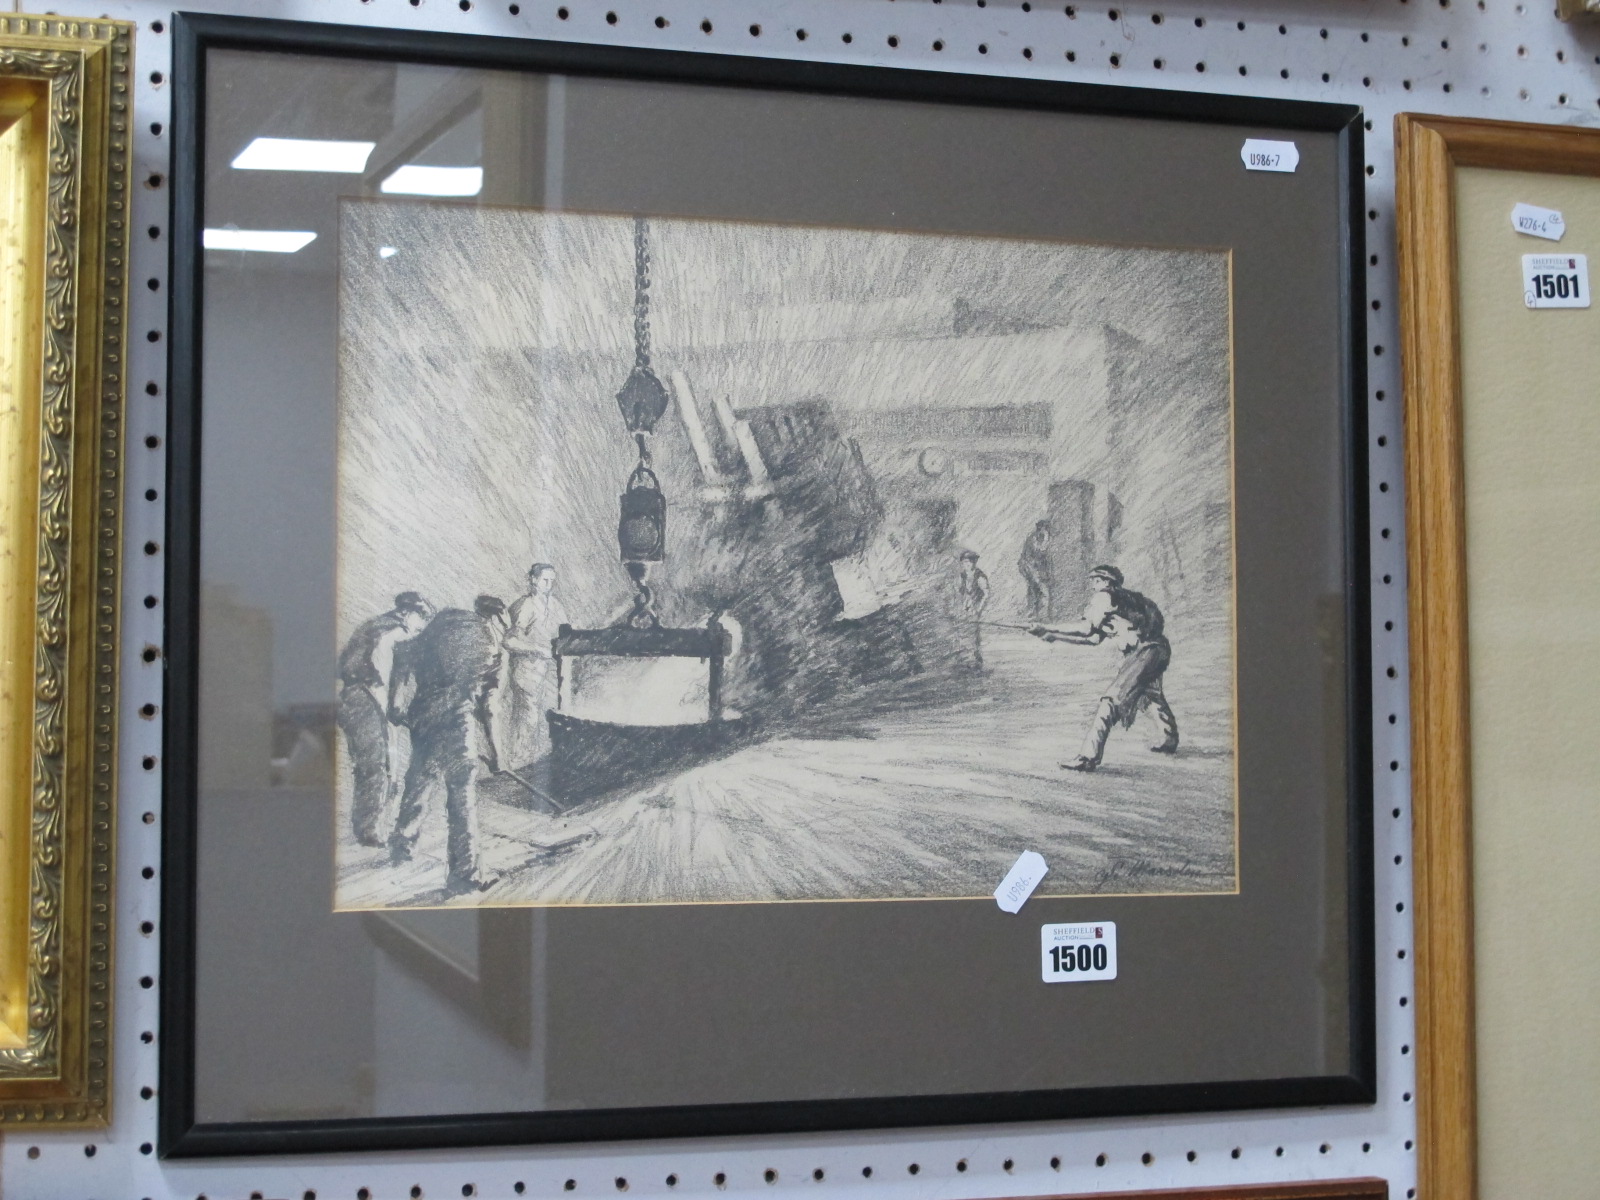 S Marsden (Sheffield Artist), Steel Furnace, pencil drawing, signed bottom right 25 x 35cm.